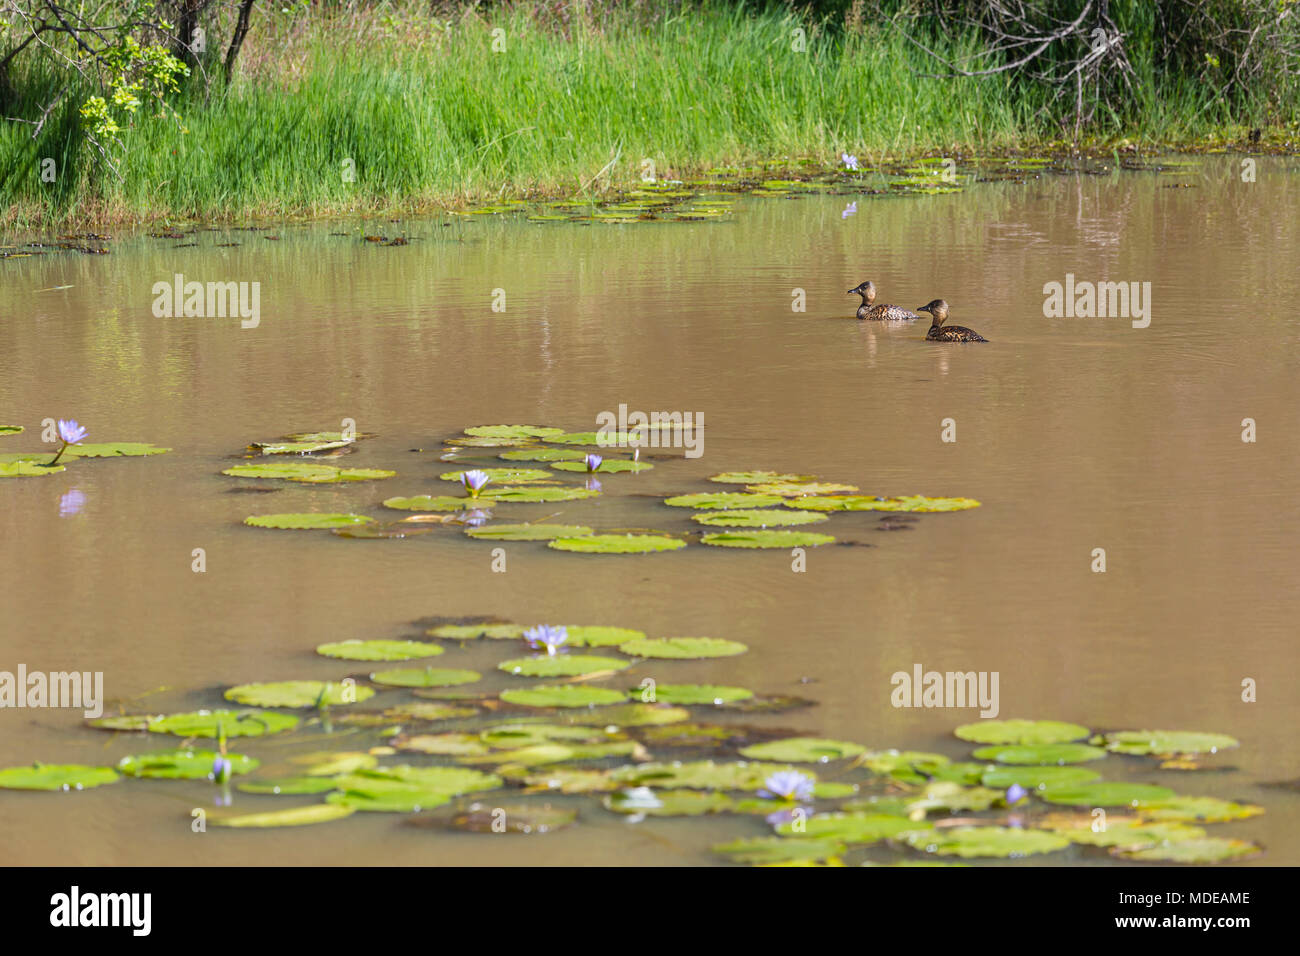 Ducks and water lilies in a lake in Karura Forest, Nairobi, Kenya. Stock Photo